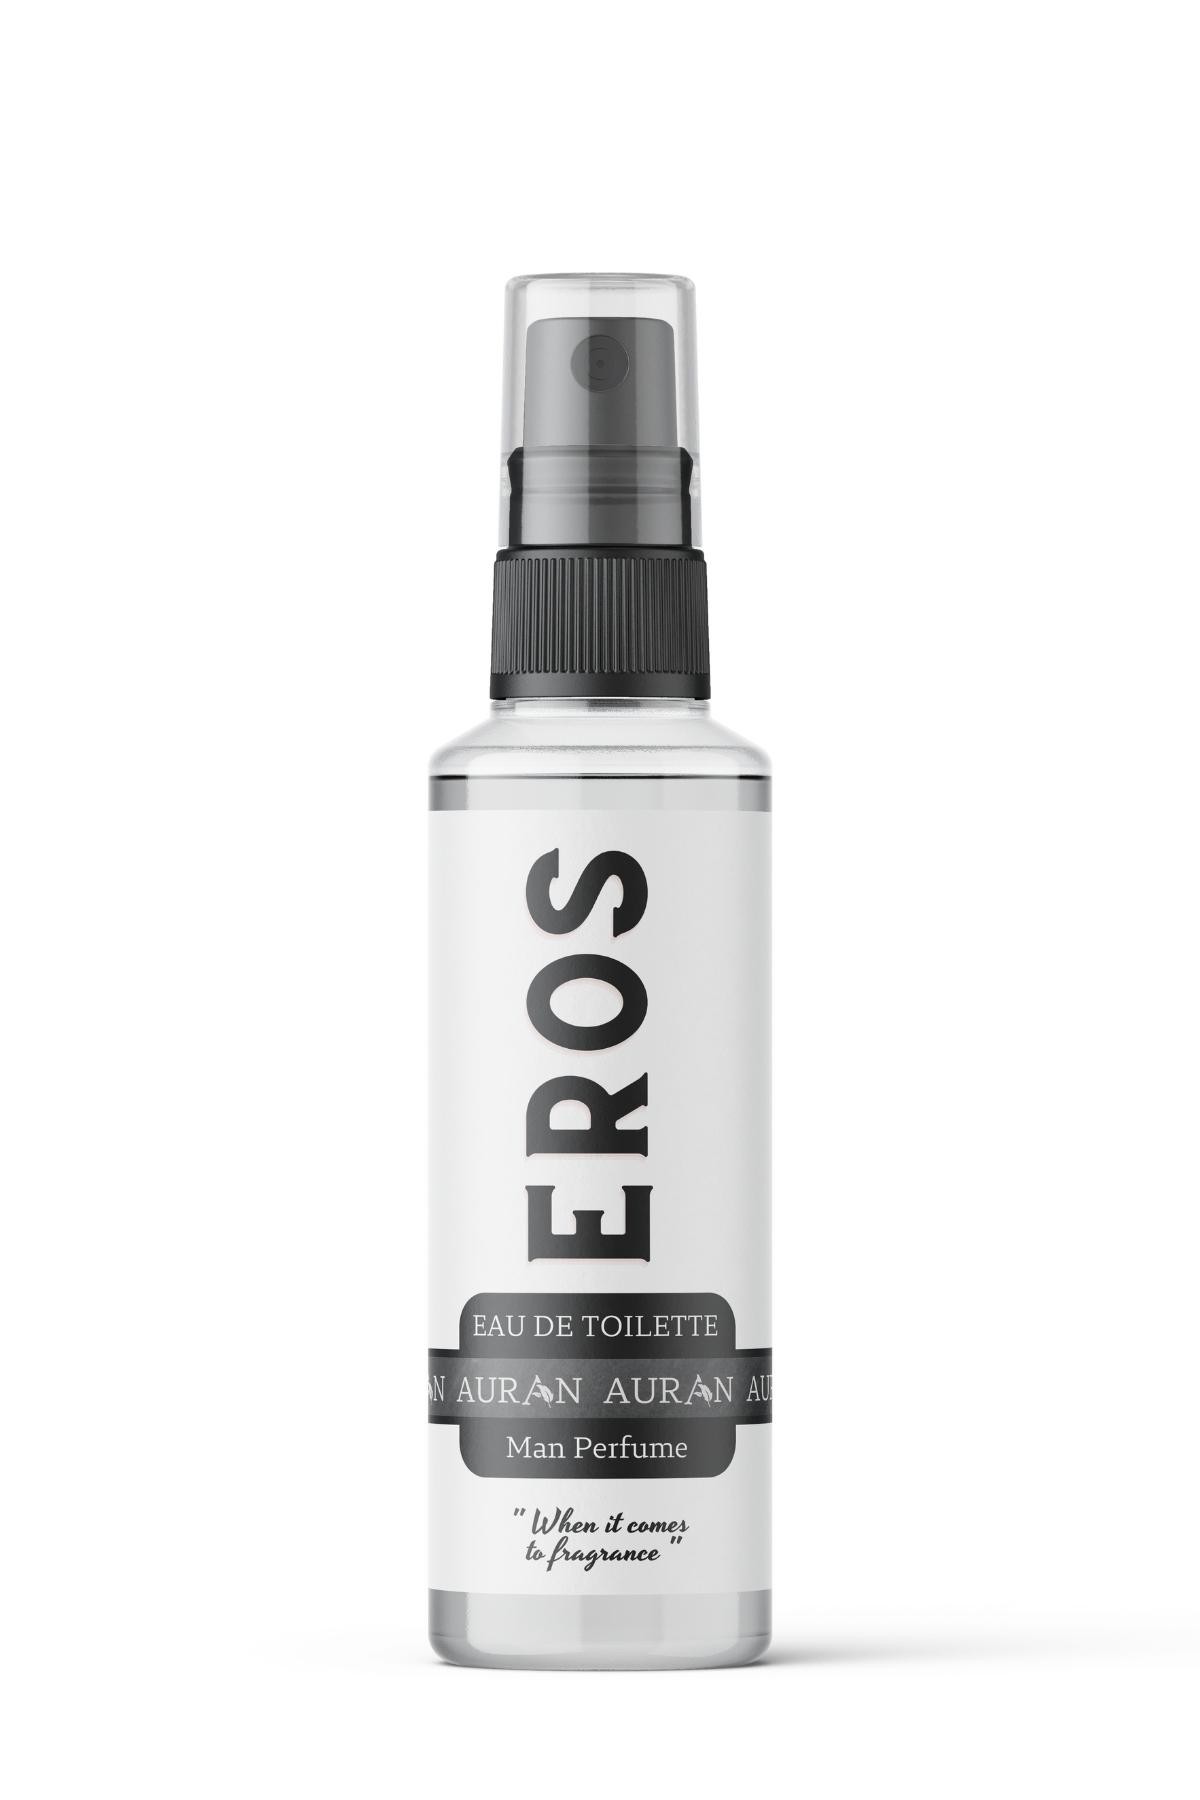 Eros Erkek Edt Parfüm Yüksek Yayılım Eau De Toilette Perfume Man 50ml